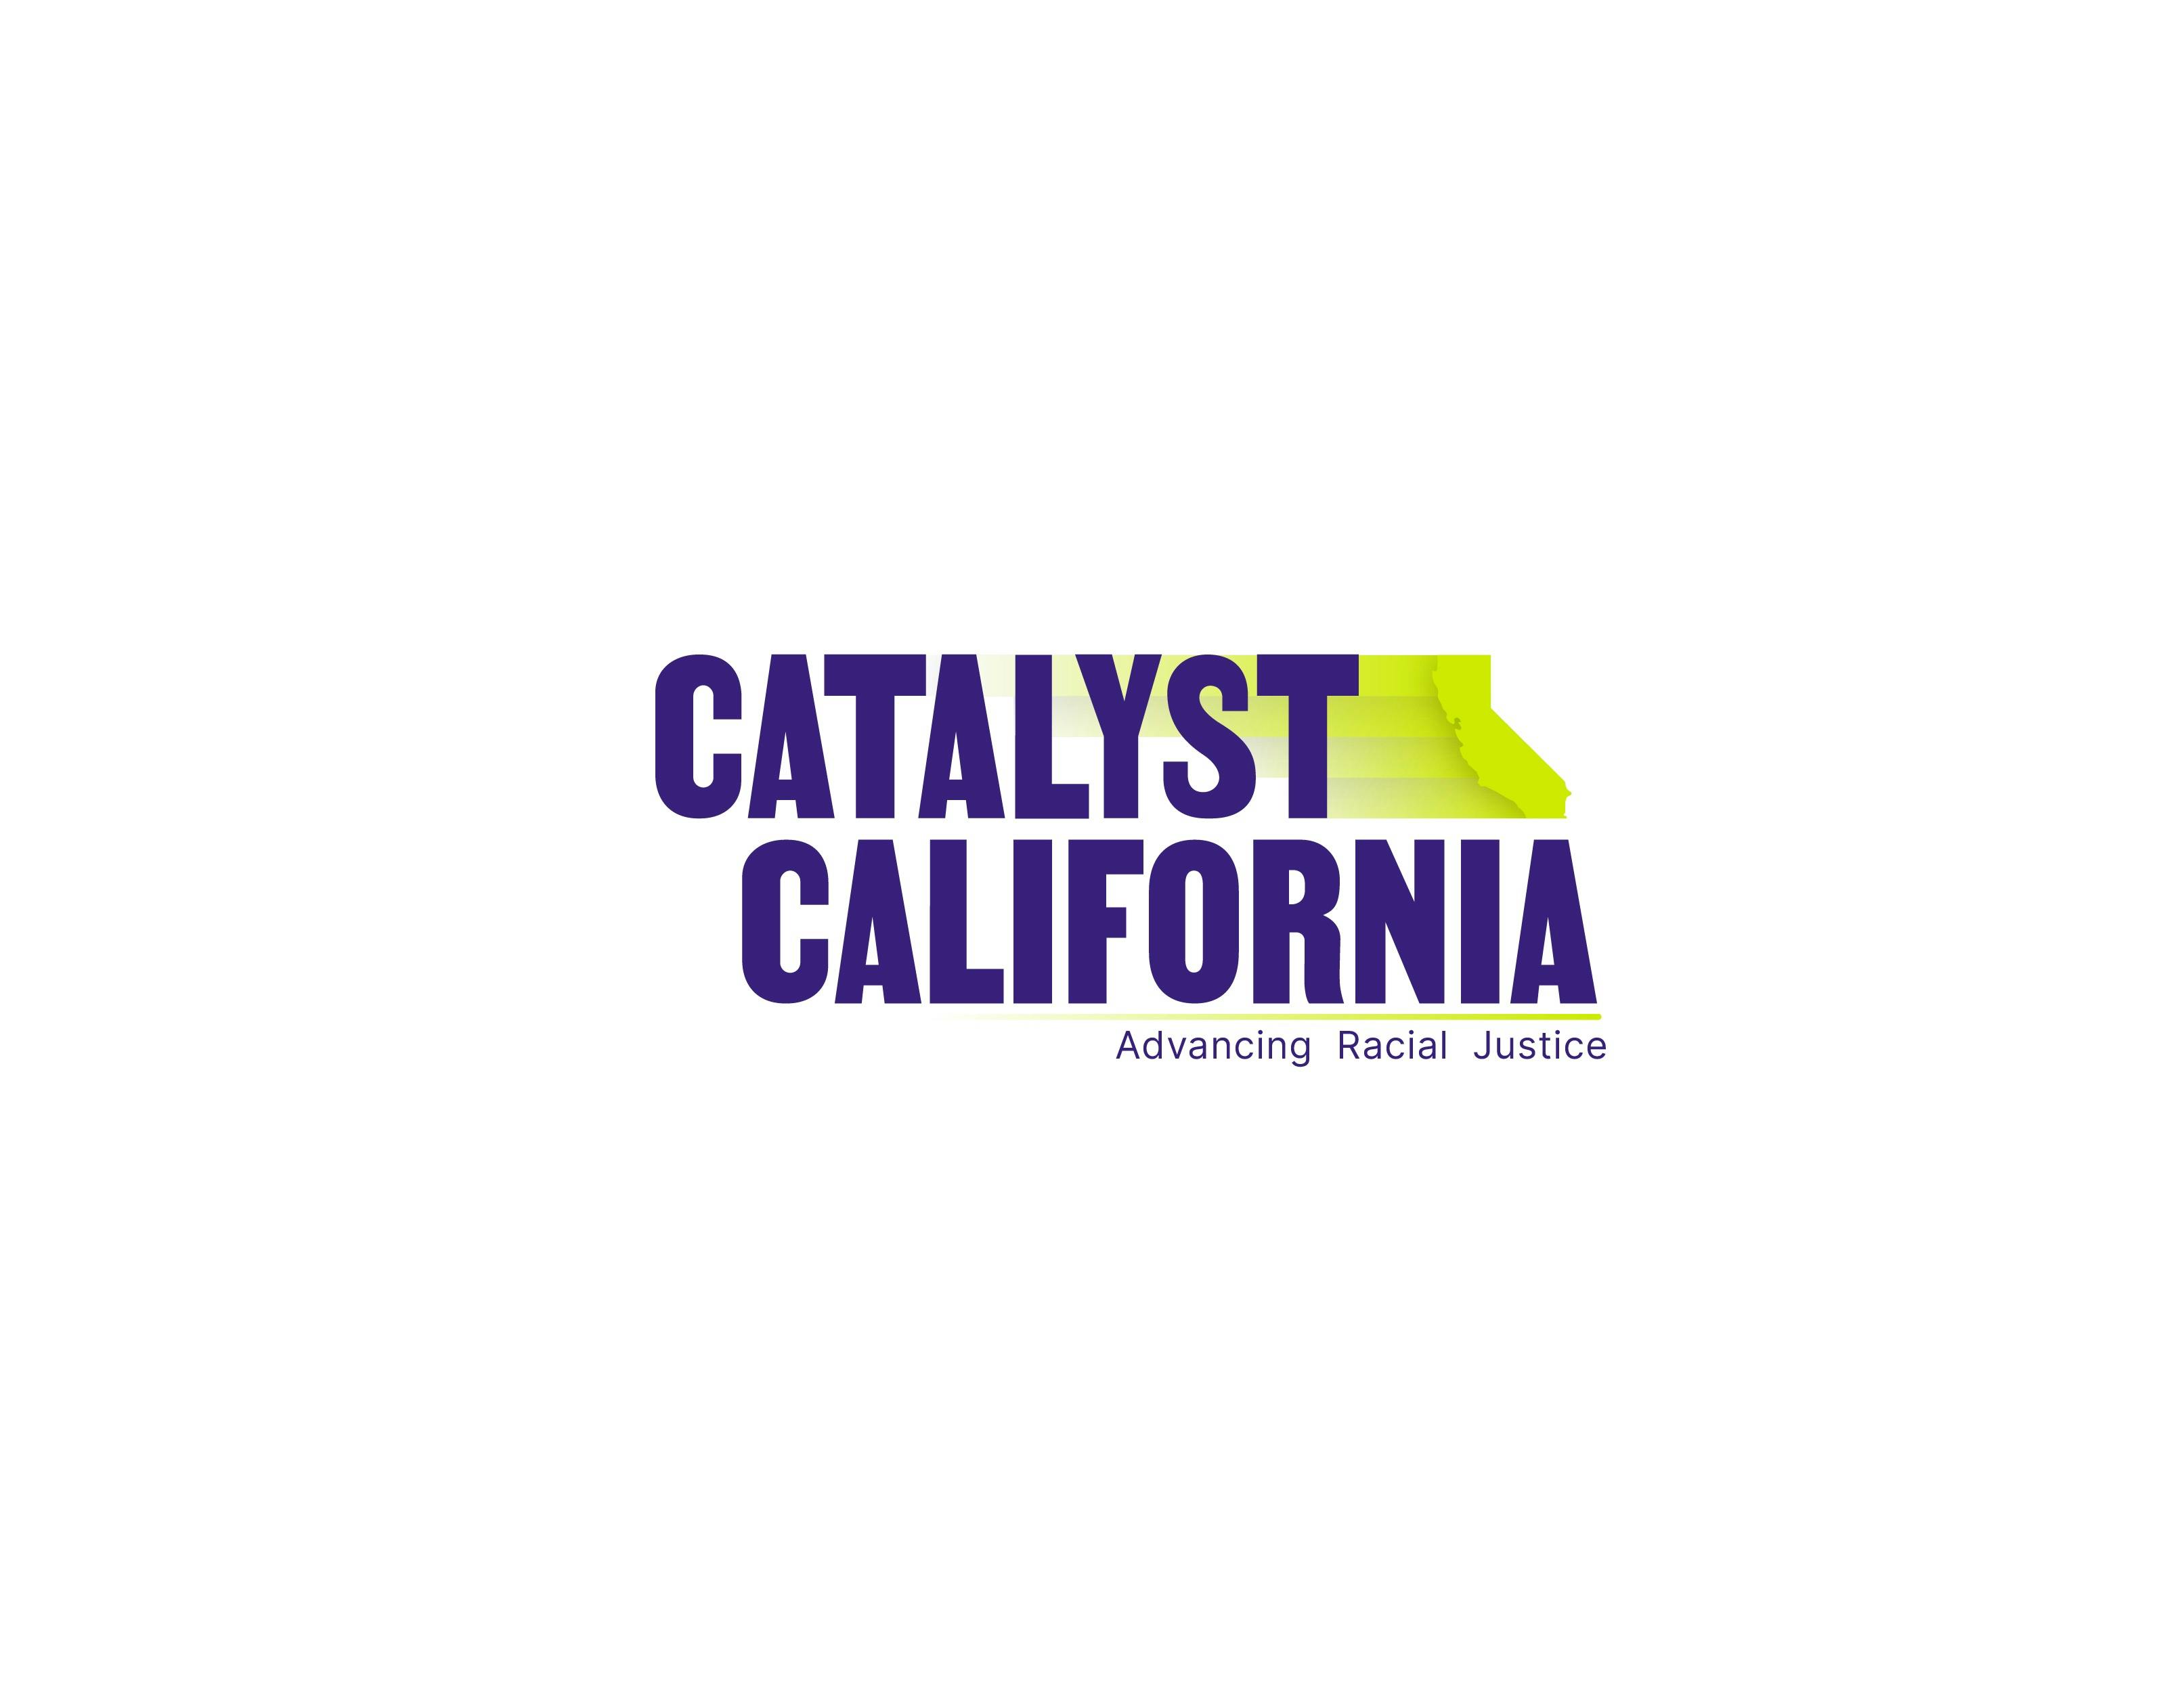 Advancing Racial Justice in California, Catalyst California